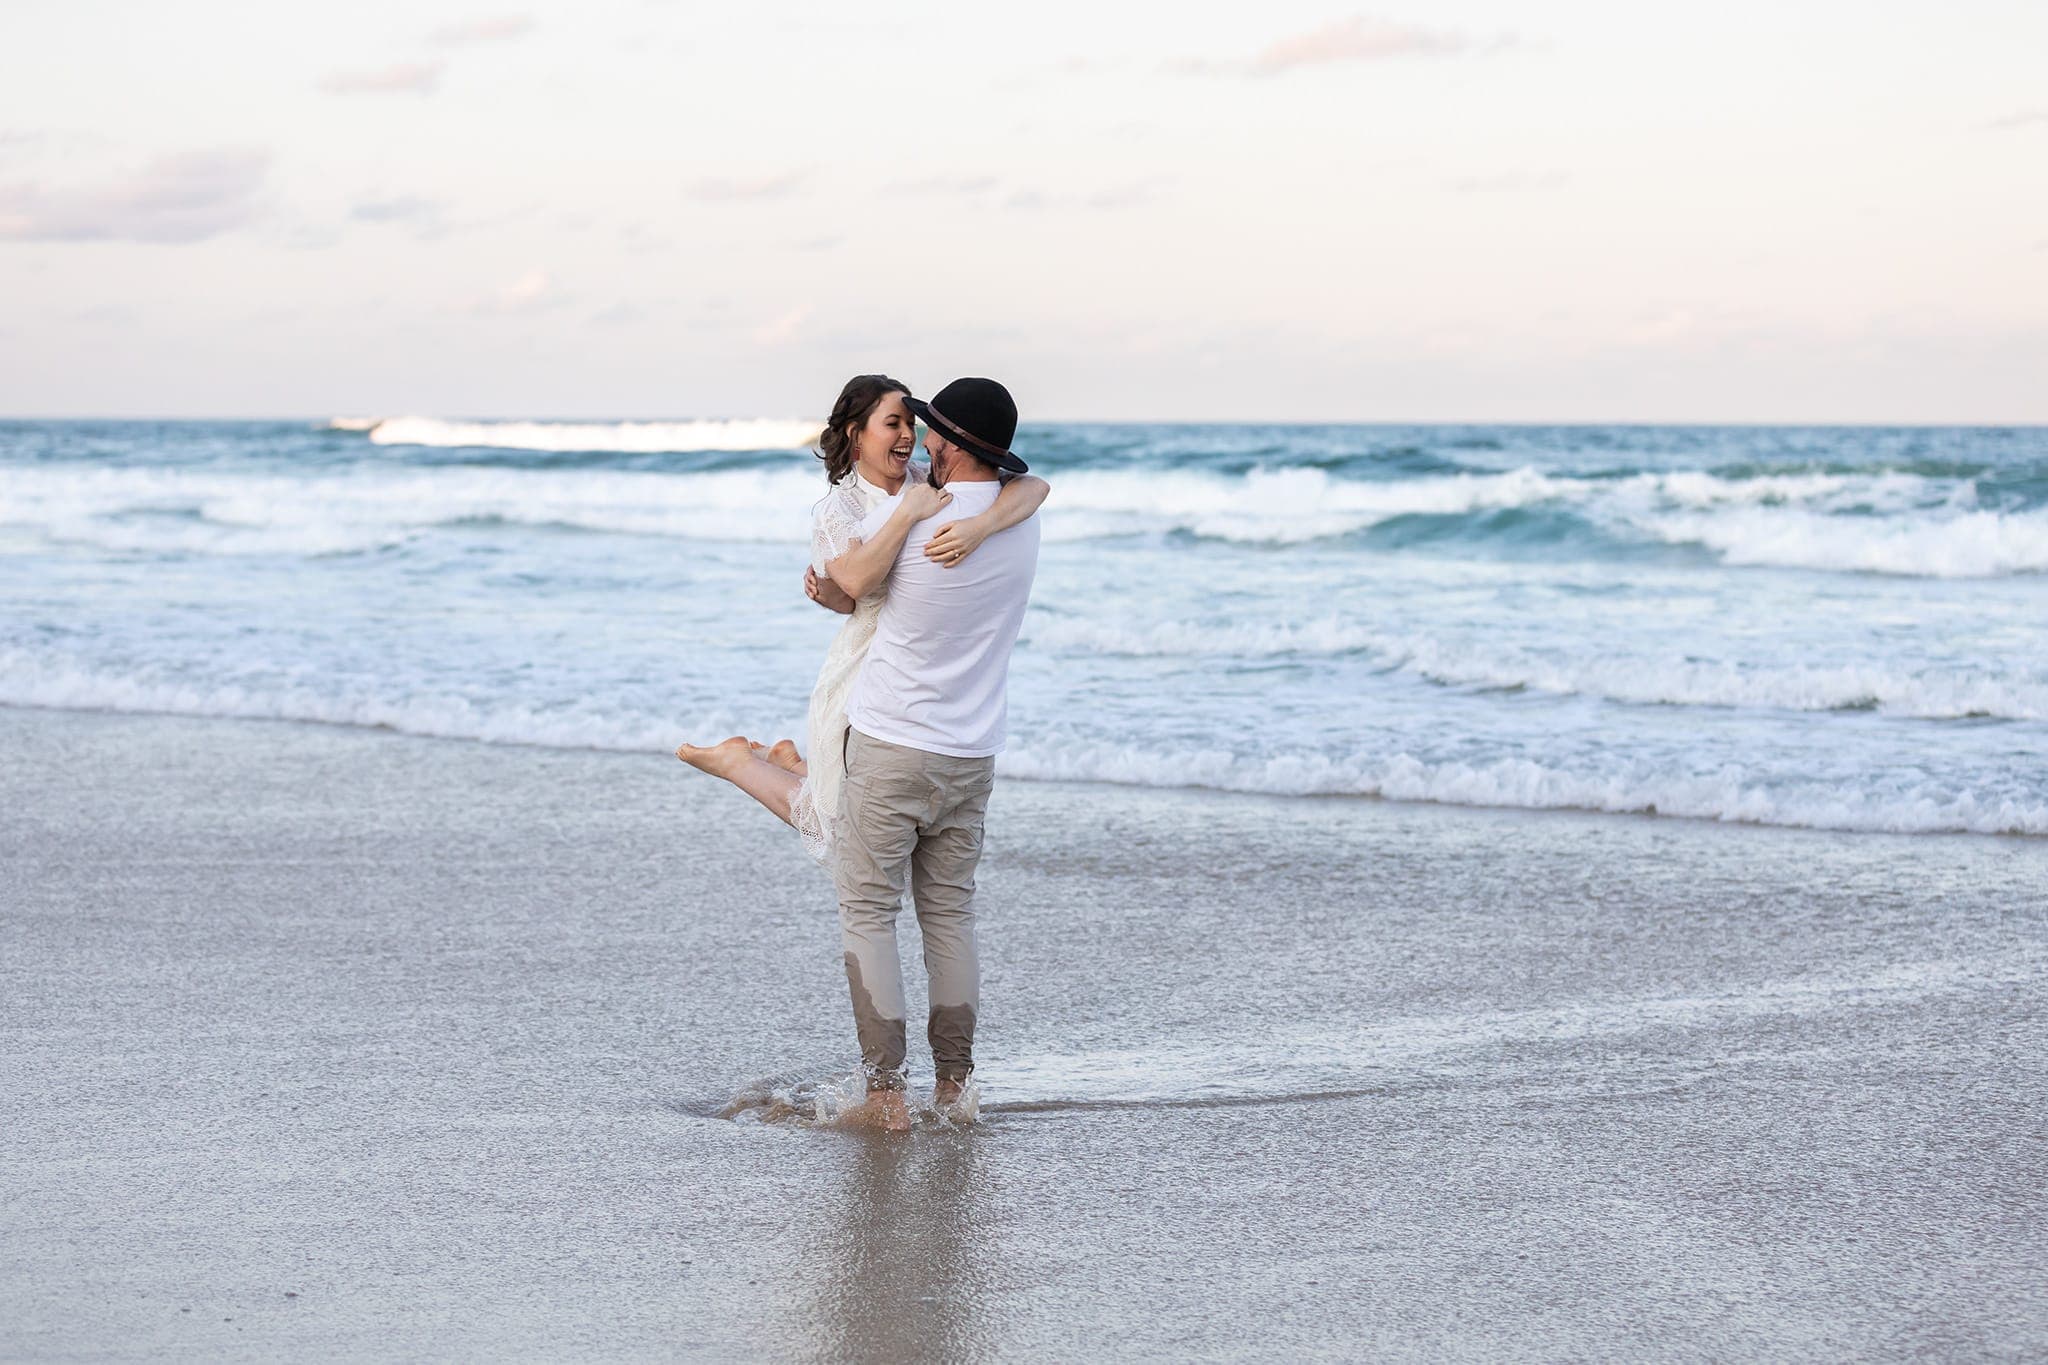 Gold Coast Wedding Photography couples beach engagement shoot